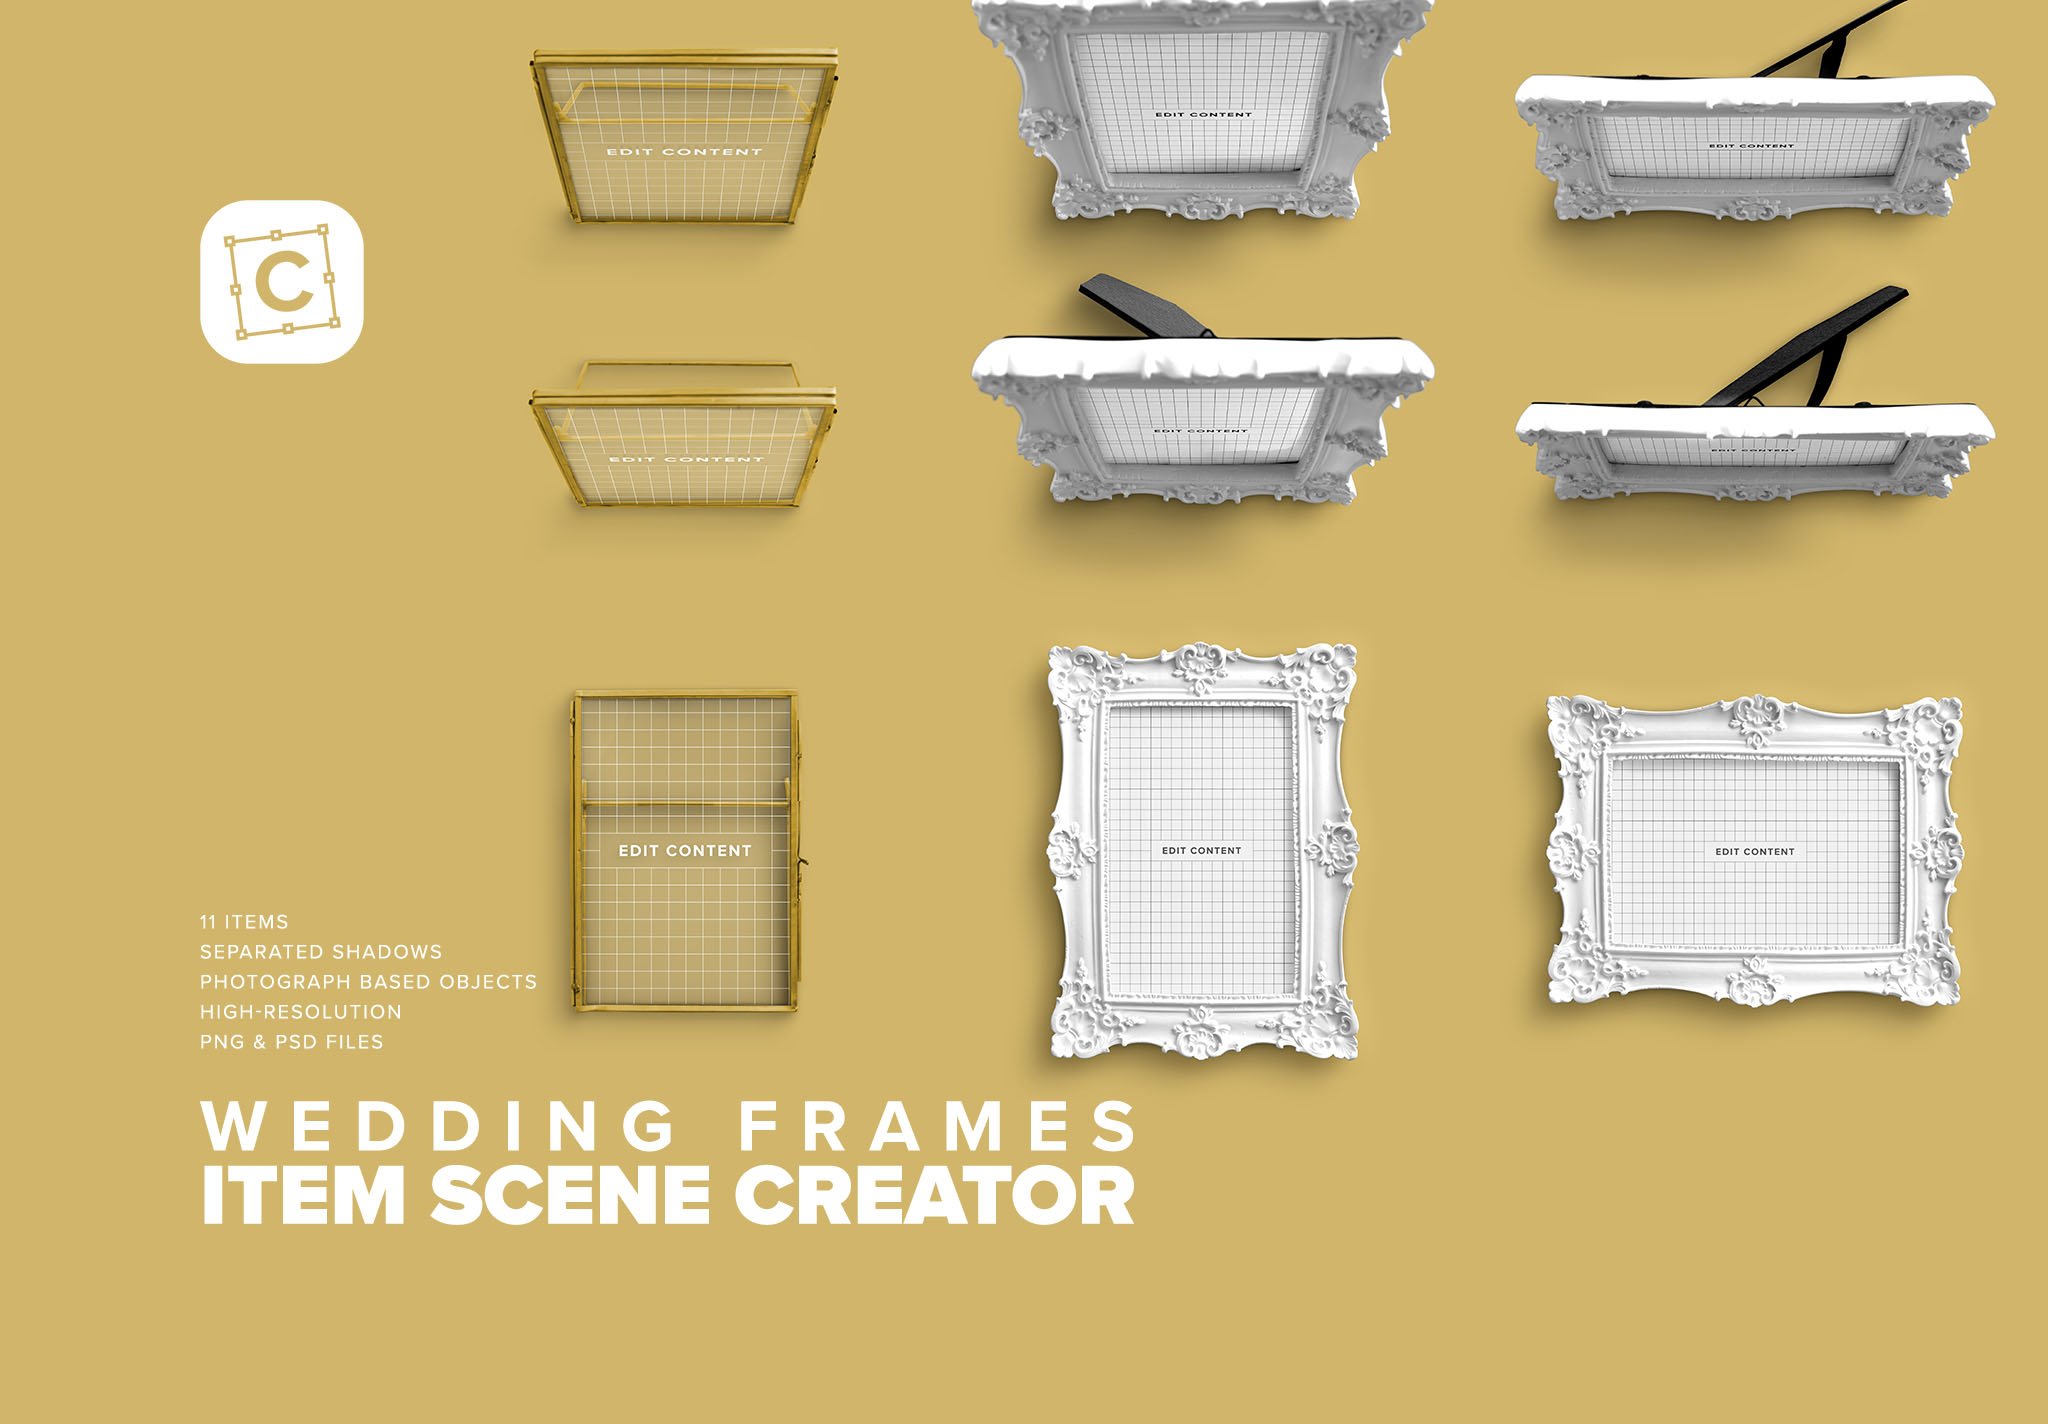 Frames Scene Creator cover image.